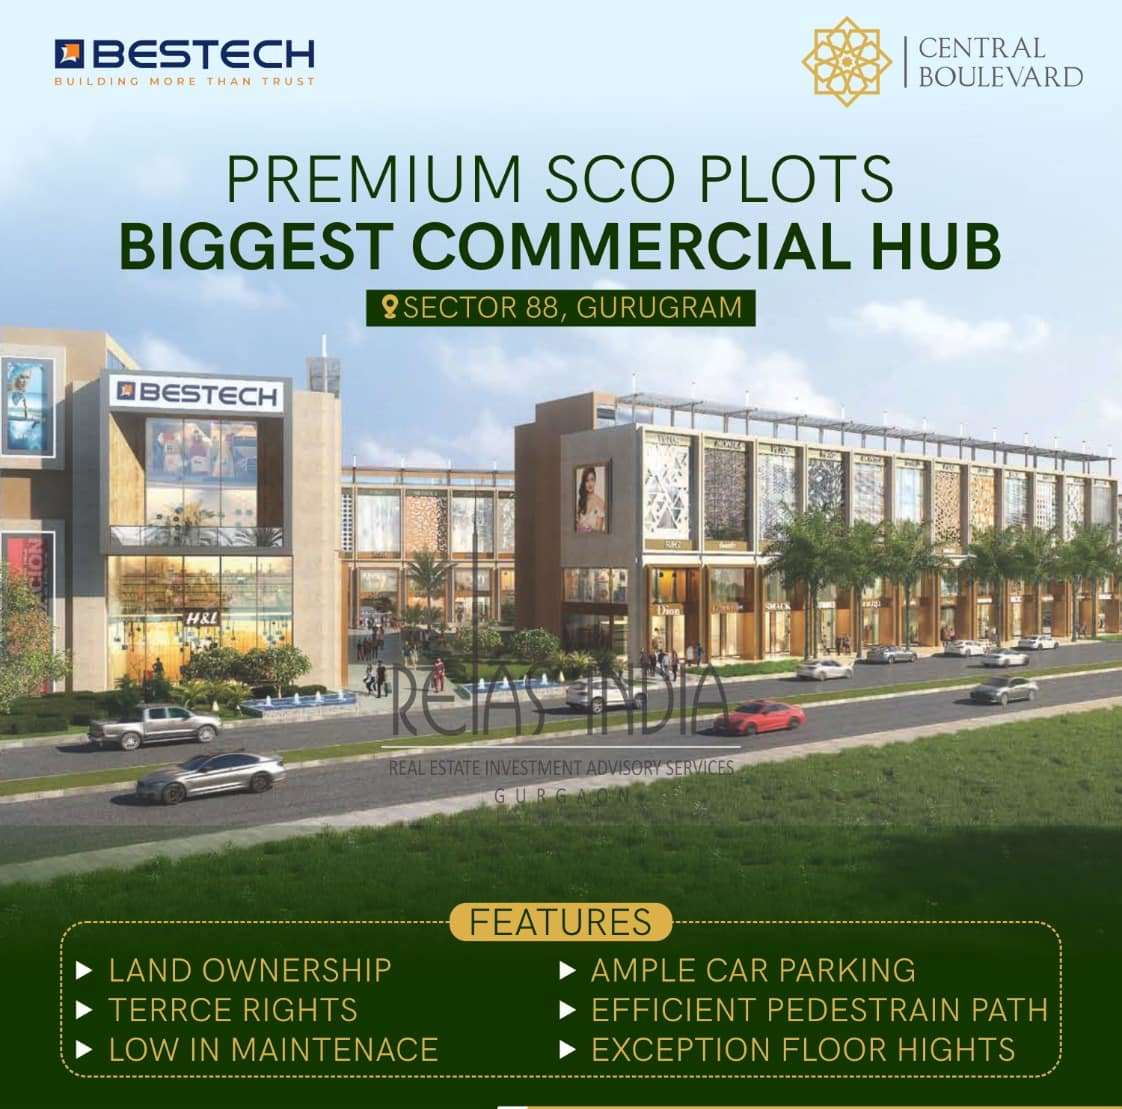 Premium SCO plots biggest commercial hub at Bestech Central Square in Gurgaon Update